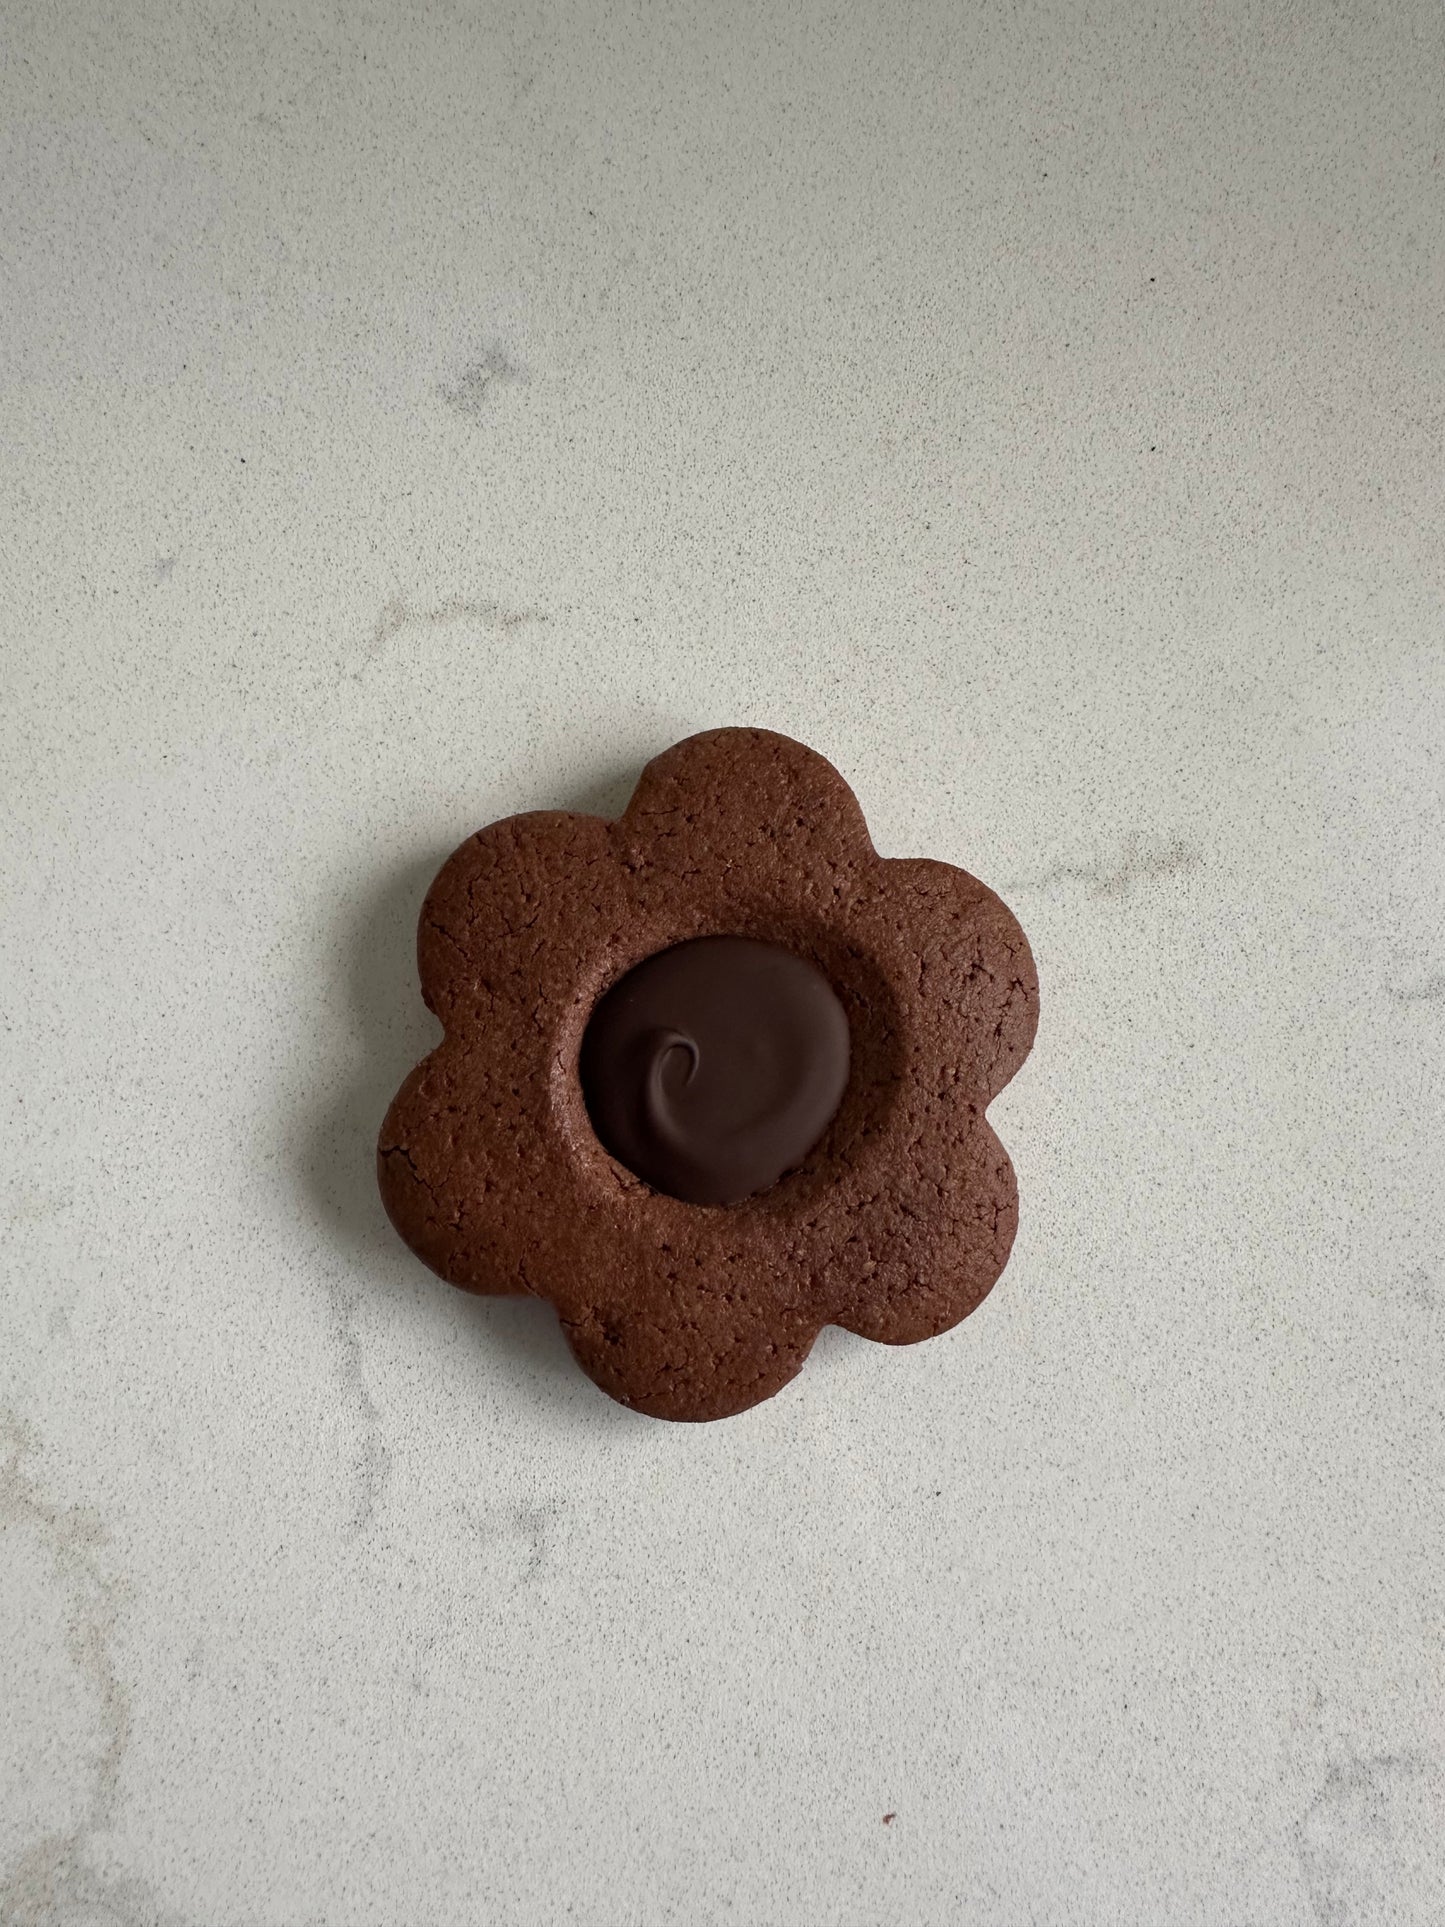 Cocoa Flower Cookies